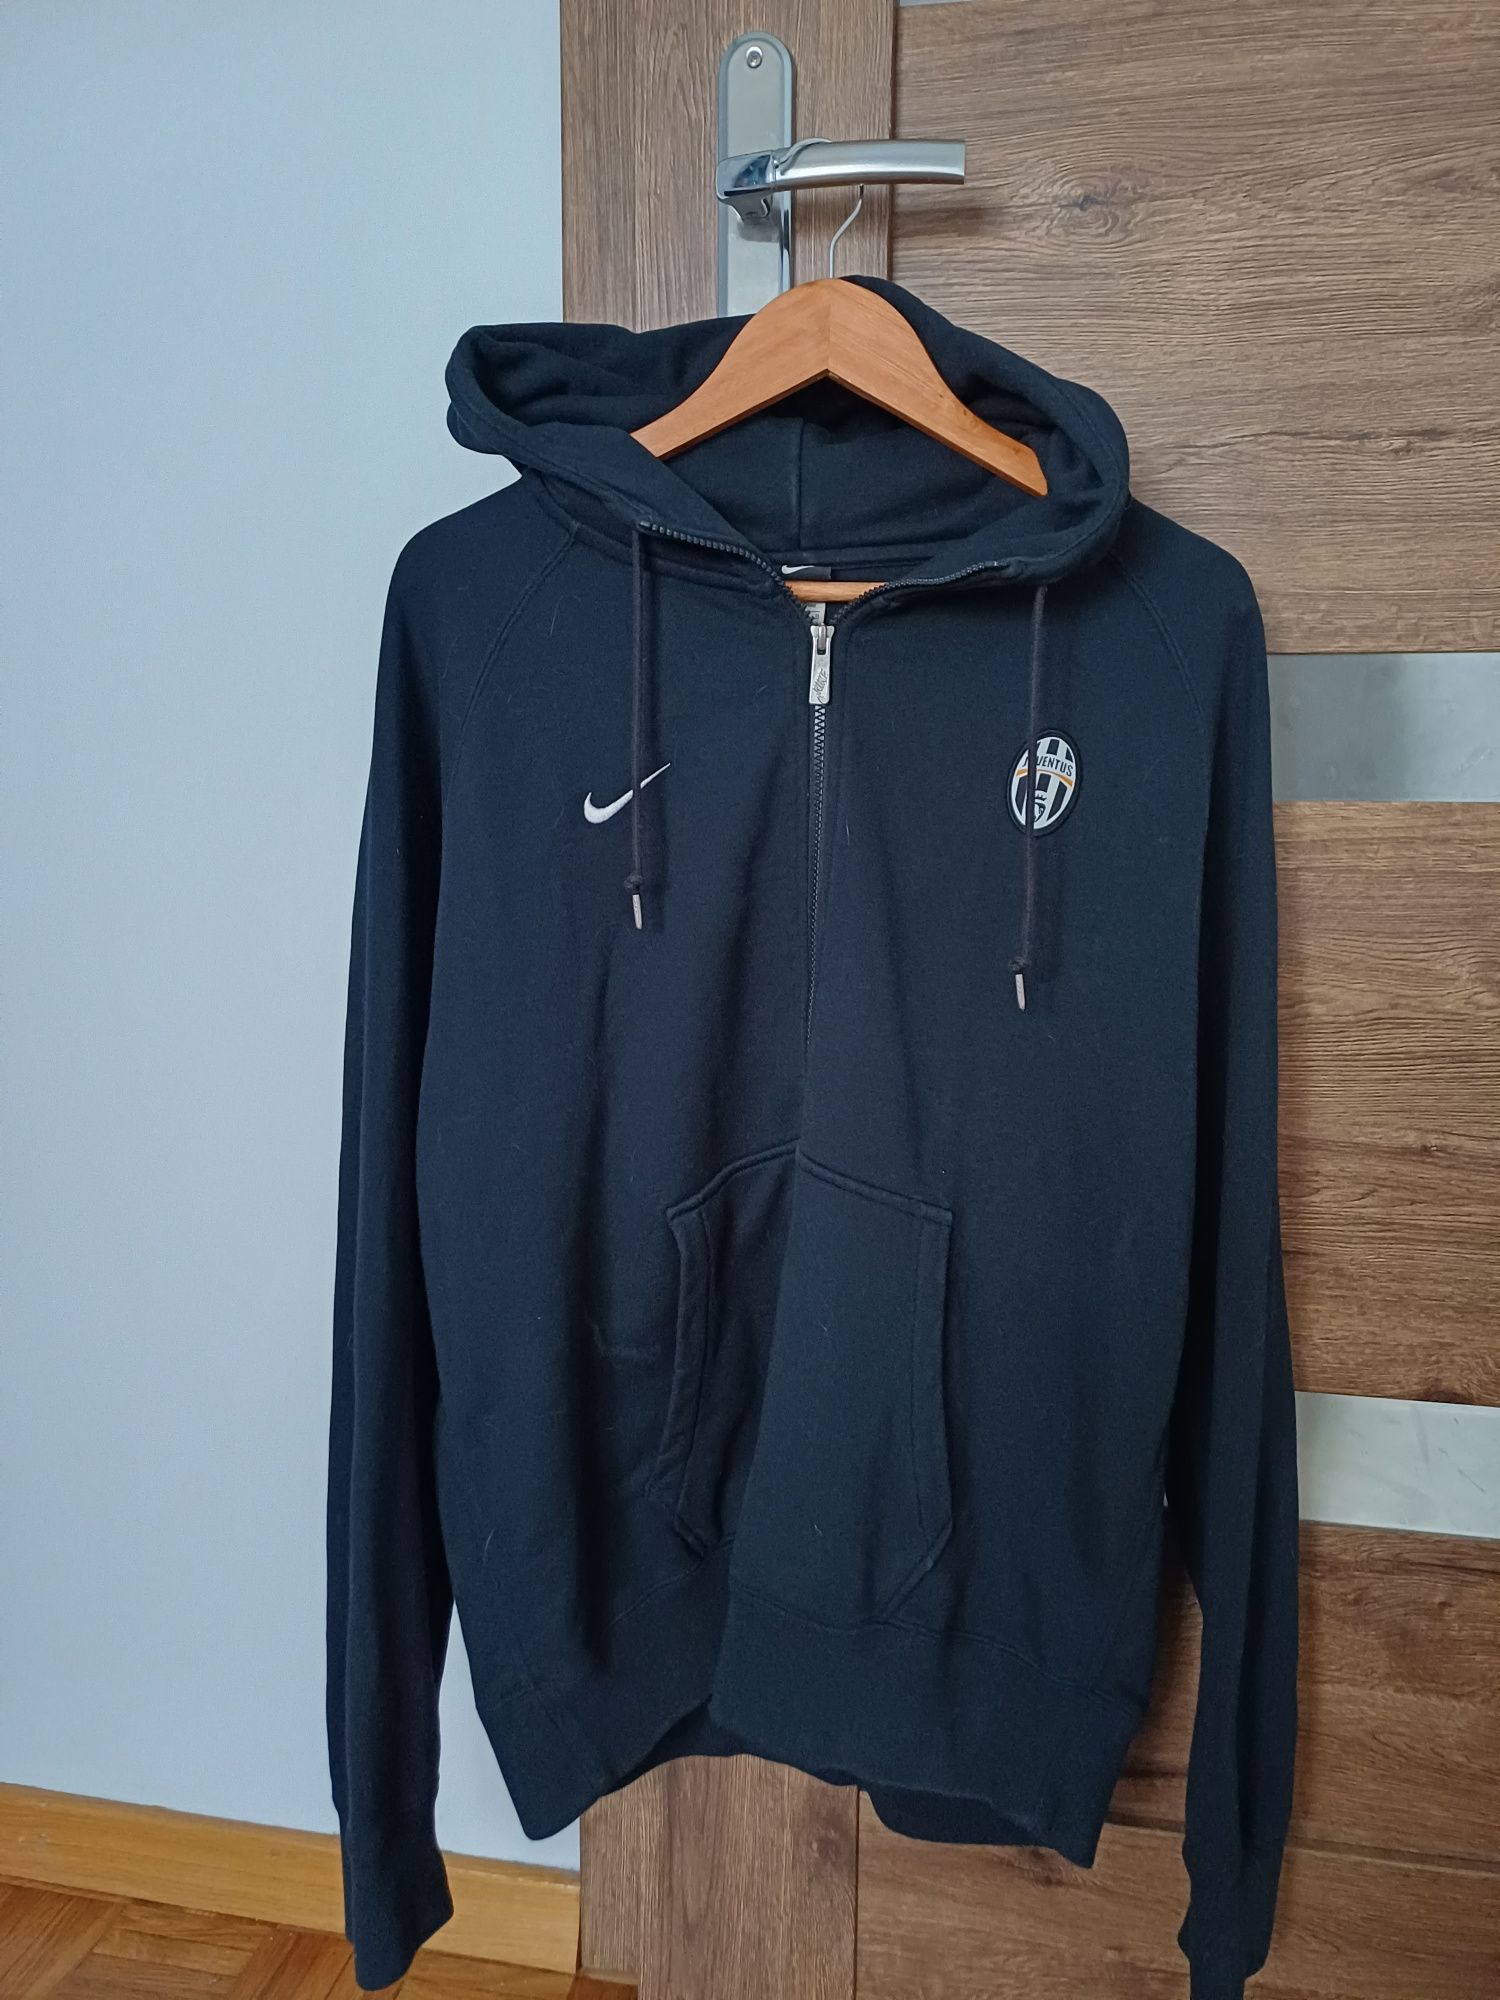 Kolekcjonerska bluza Juventus Nike rozmiar L